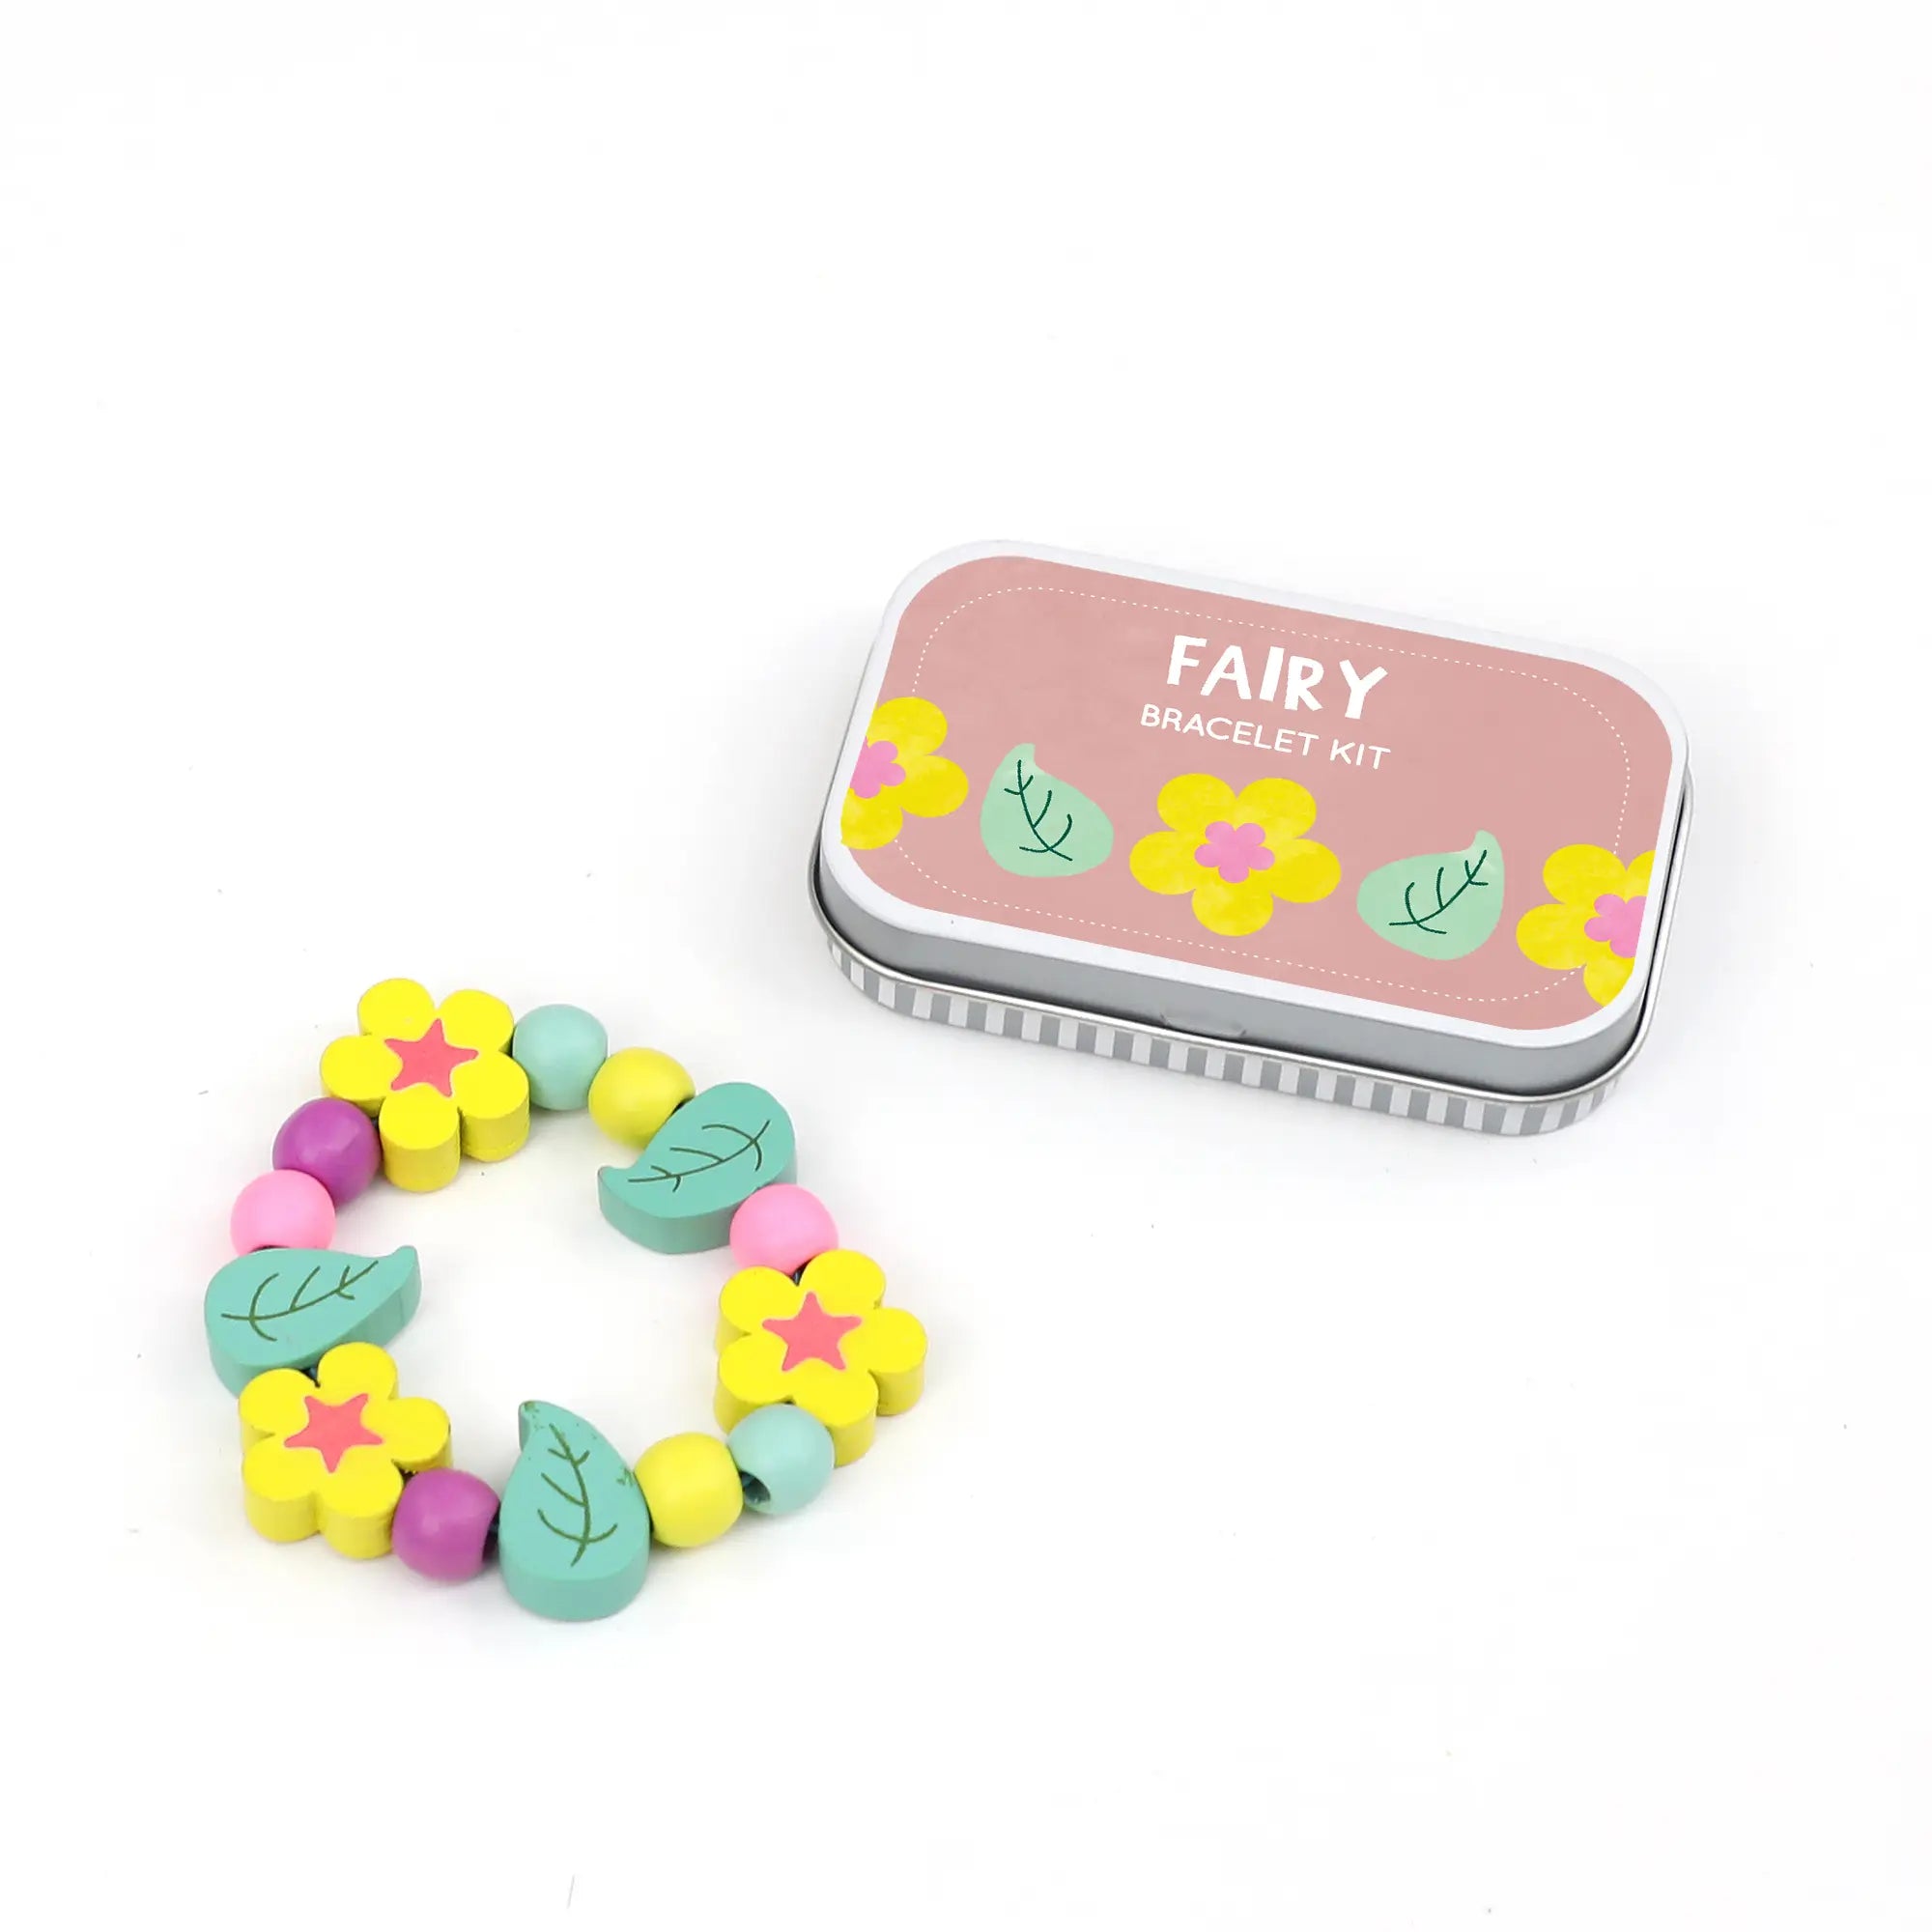 fairy bracelet gift kit by Cotton Twist